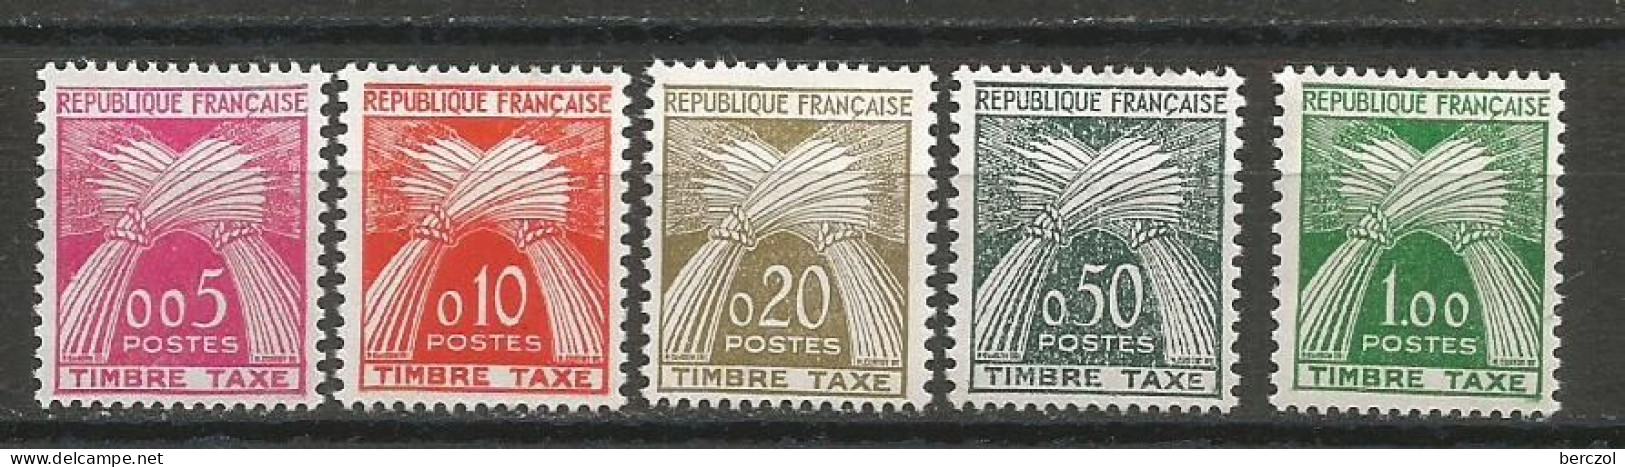 FRANCE ANNEE 1960 TAXE LOT DE 5 TP N°90 à 94 NEUFS ** MNH TB COTE 70,00 €  - 1960-.... Postfris